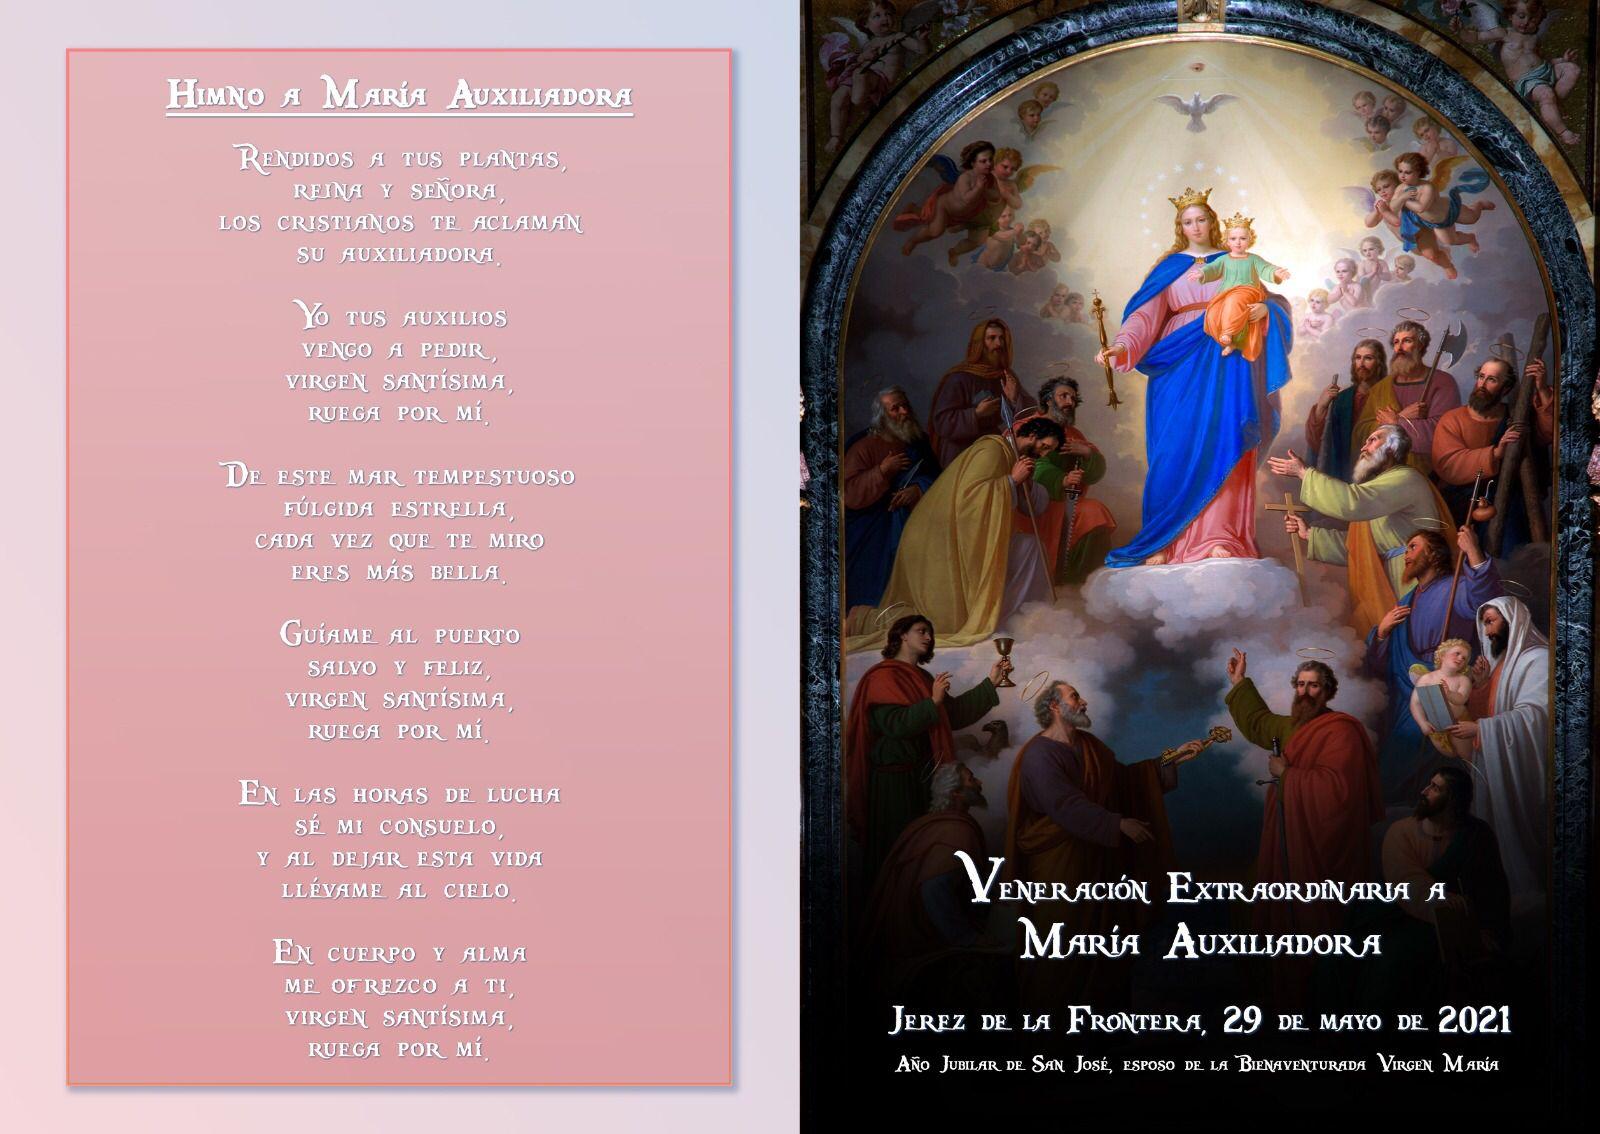 Este sábado, veneración extraordinaria en Jerez a María Auxiliadora